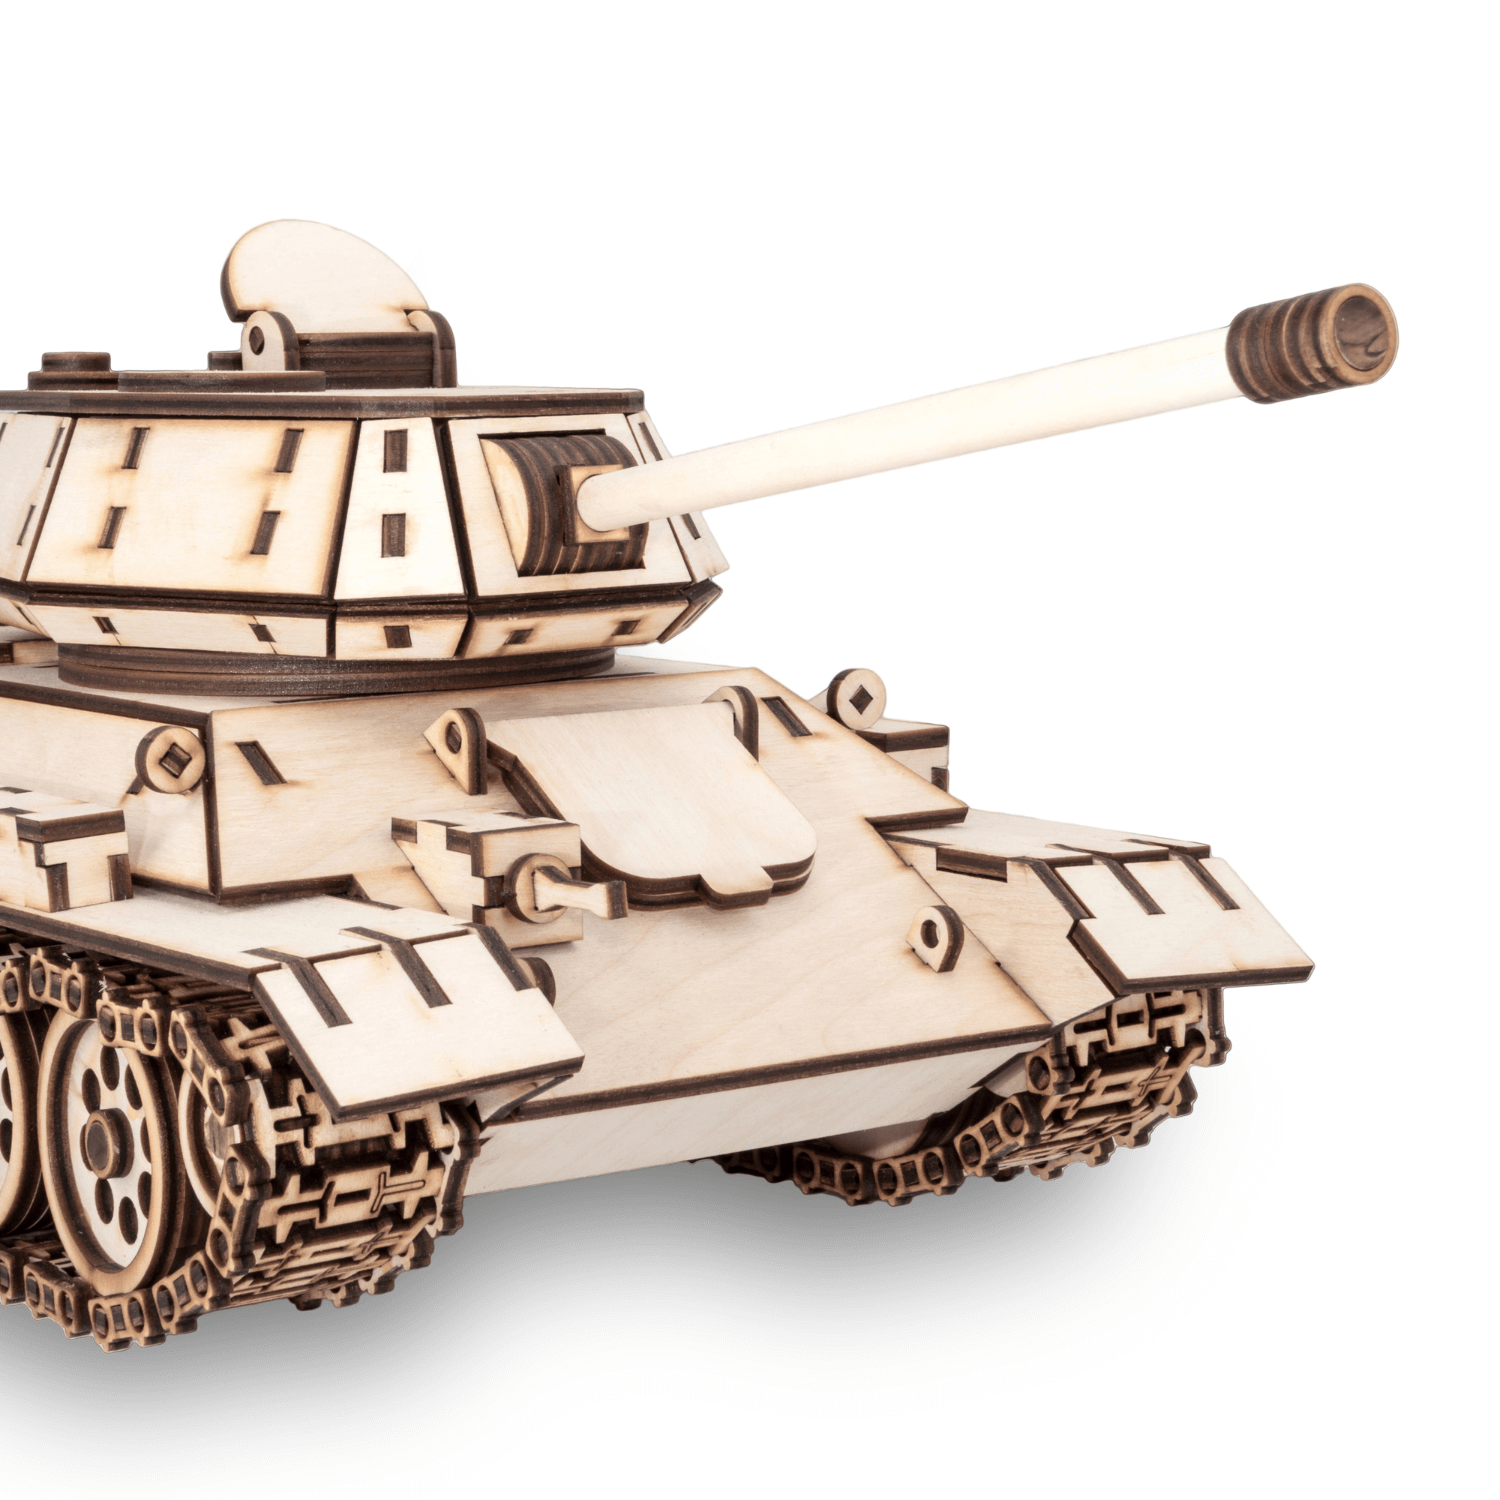 TANK T-34 | Tank-Mechanische Houten Puzzel-Eco-Hout-Kunst...